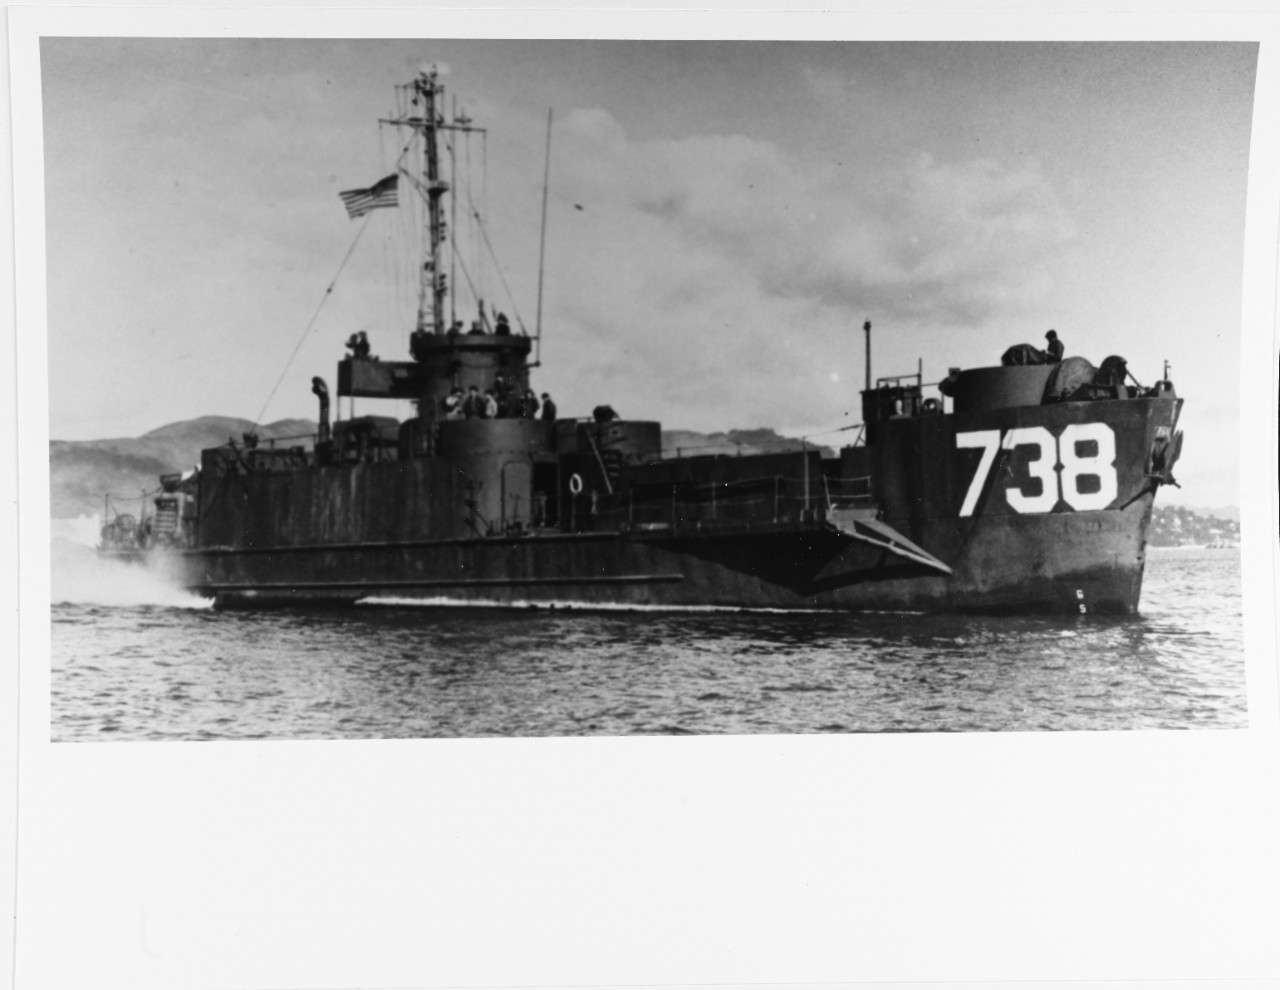 USS LCI-738